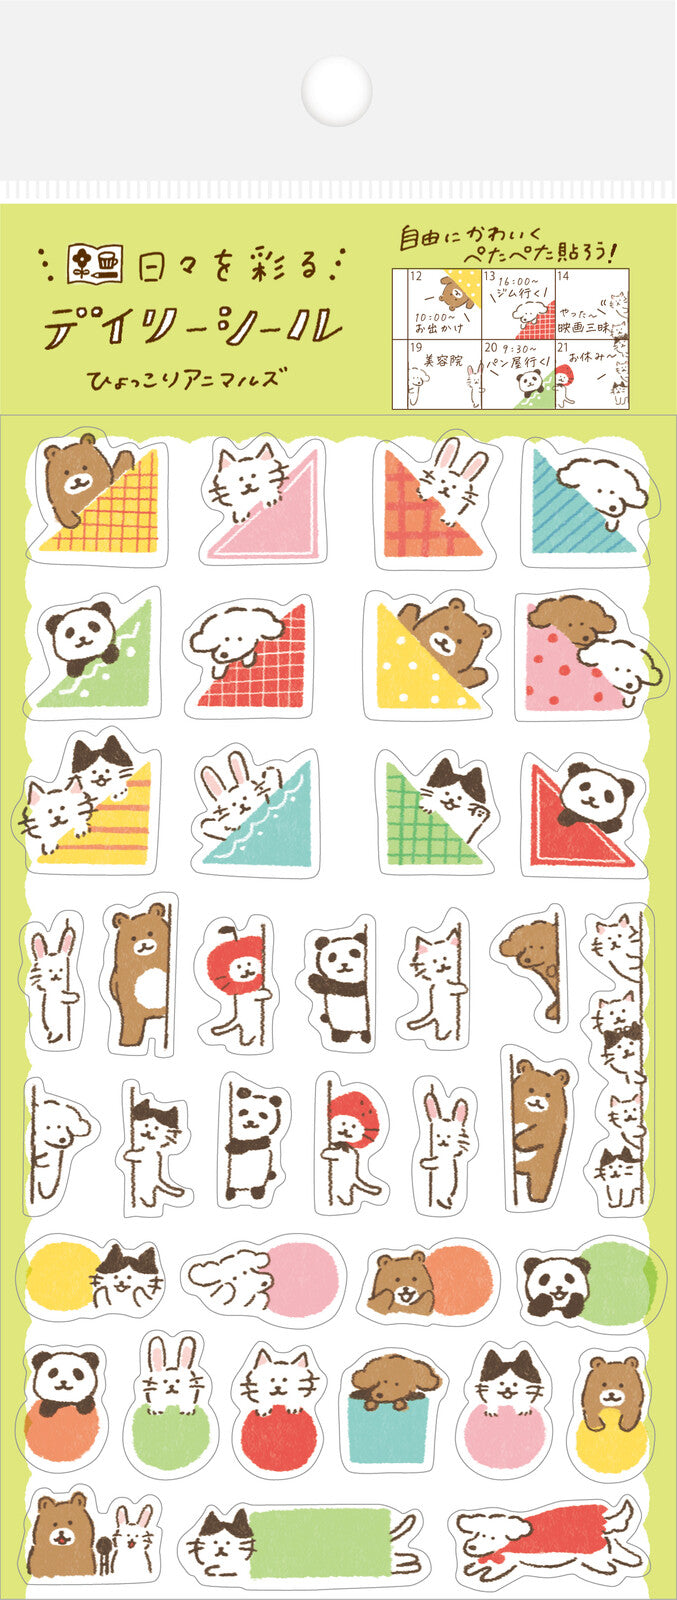 Mini Japanese Agenda Stickers